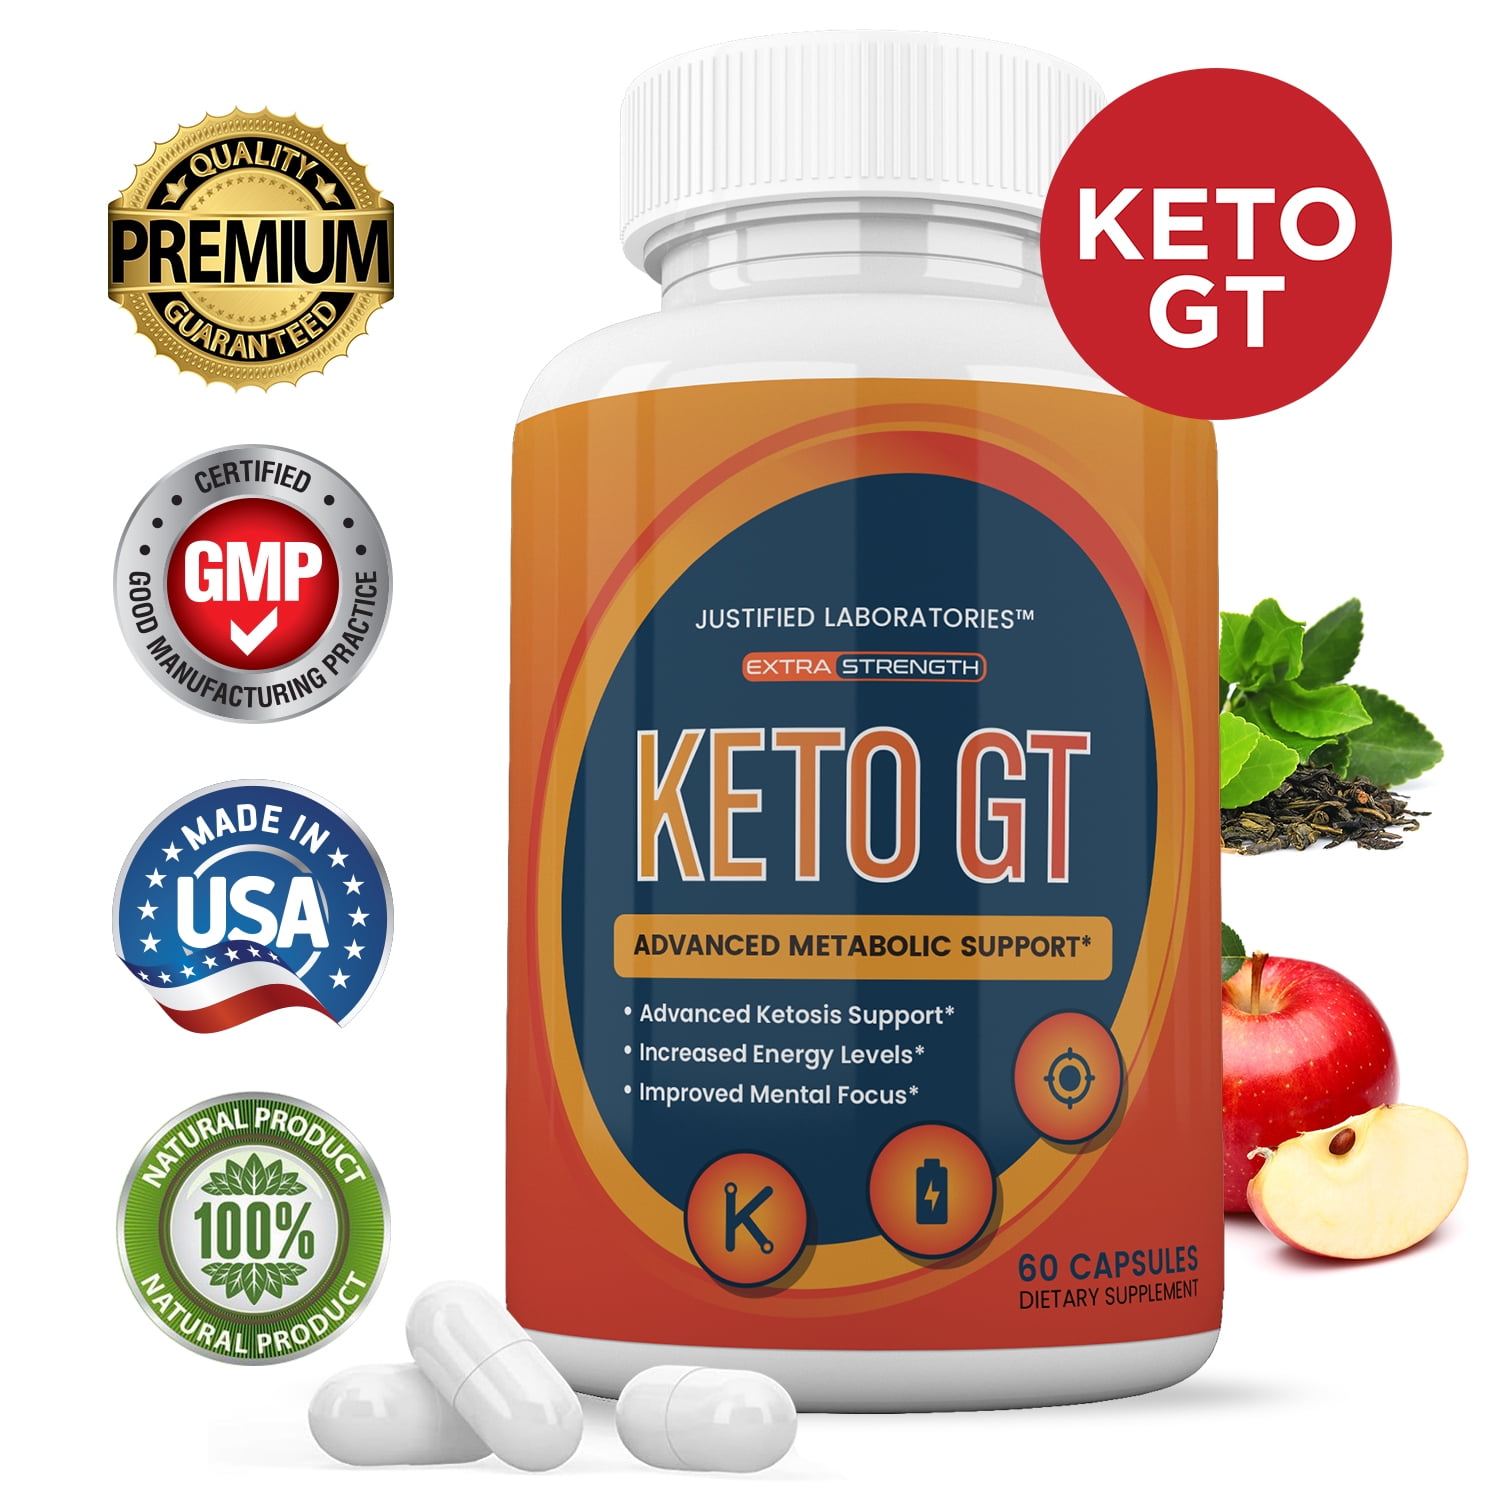 Keto Gt Advanced Ketogenic Pills Supplement Includes Gobhb Exogenous Ketones Premium Ketosis Support For Men Women 60 Capsules Walmart Com Walmart Com